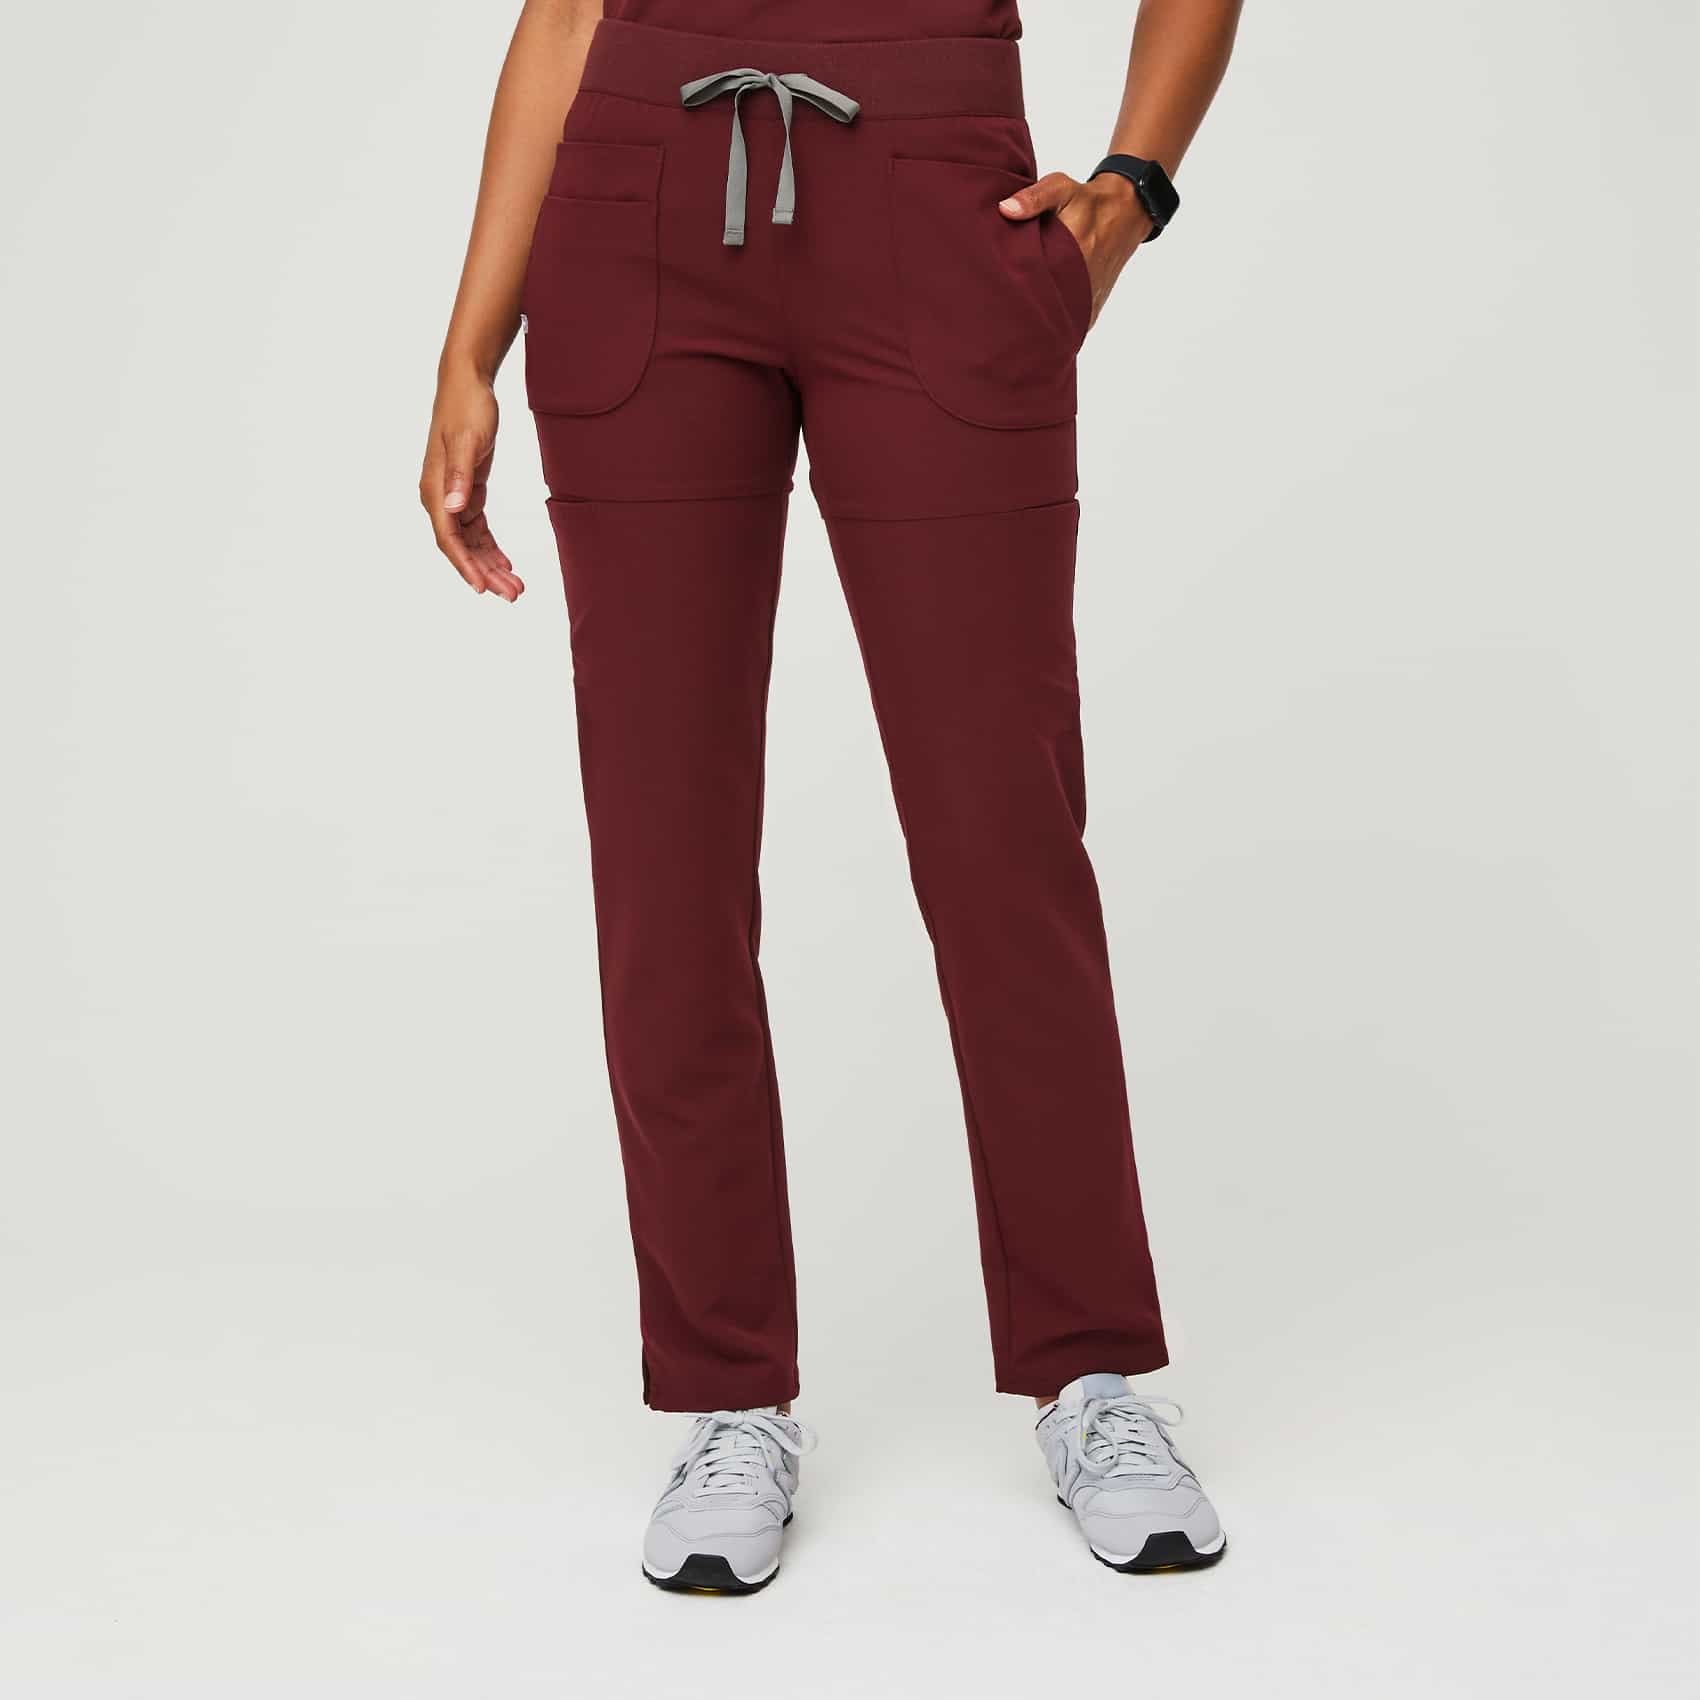 fcity.in - Trendy Graceful Women Maroon Cotton Blend Trousers / Trousers  Pants